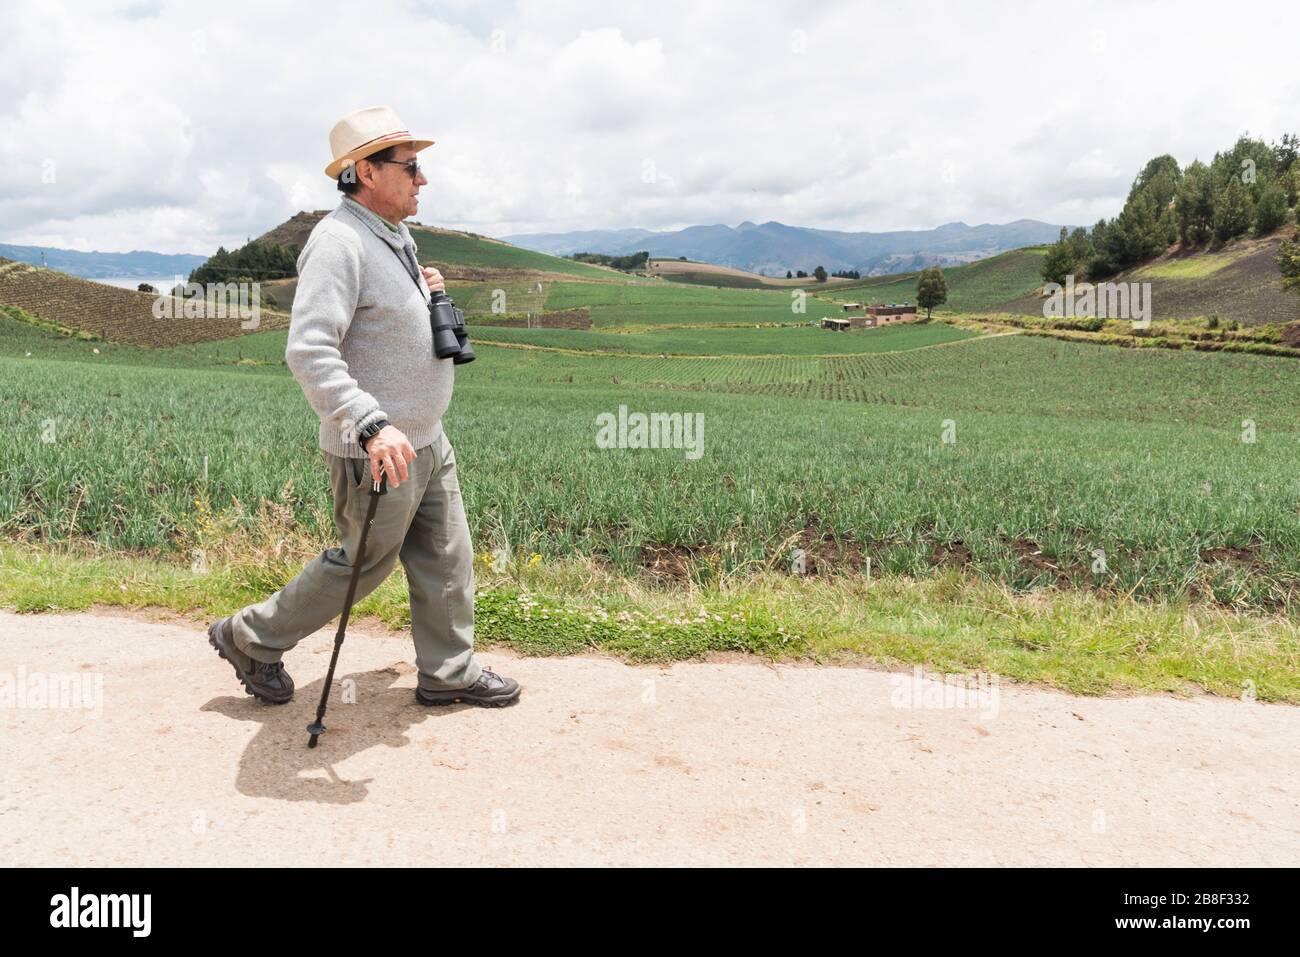 Aquitania, Boyaca / Colombia; April 8, 2018: man walking along a path surrounded by welsh onion fields Stock Photo